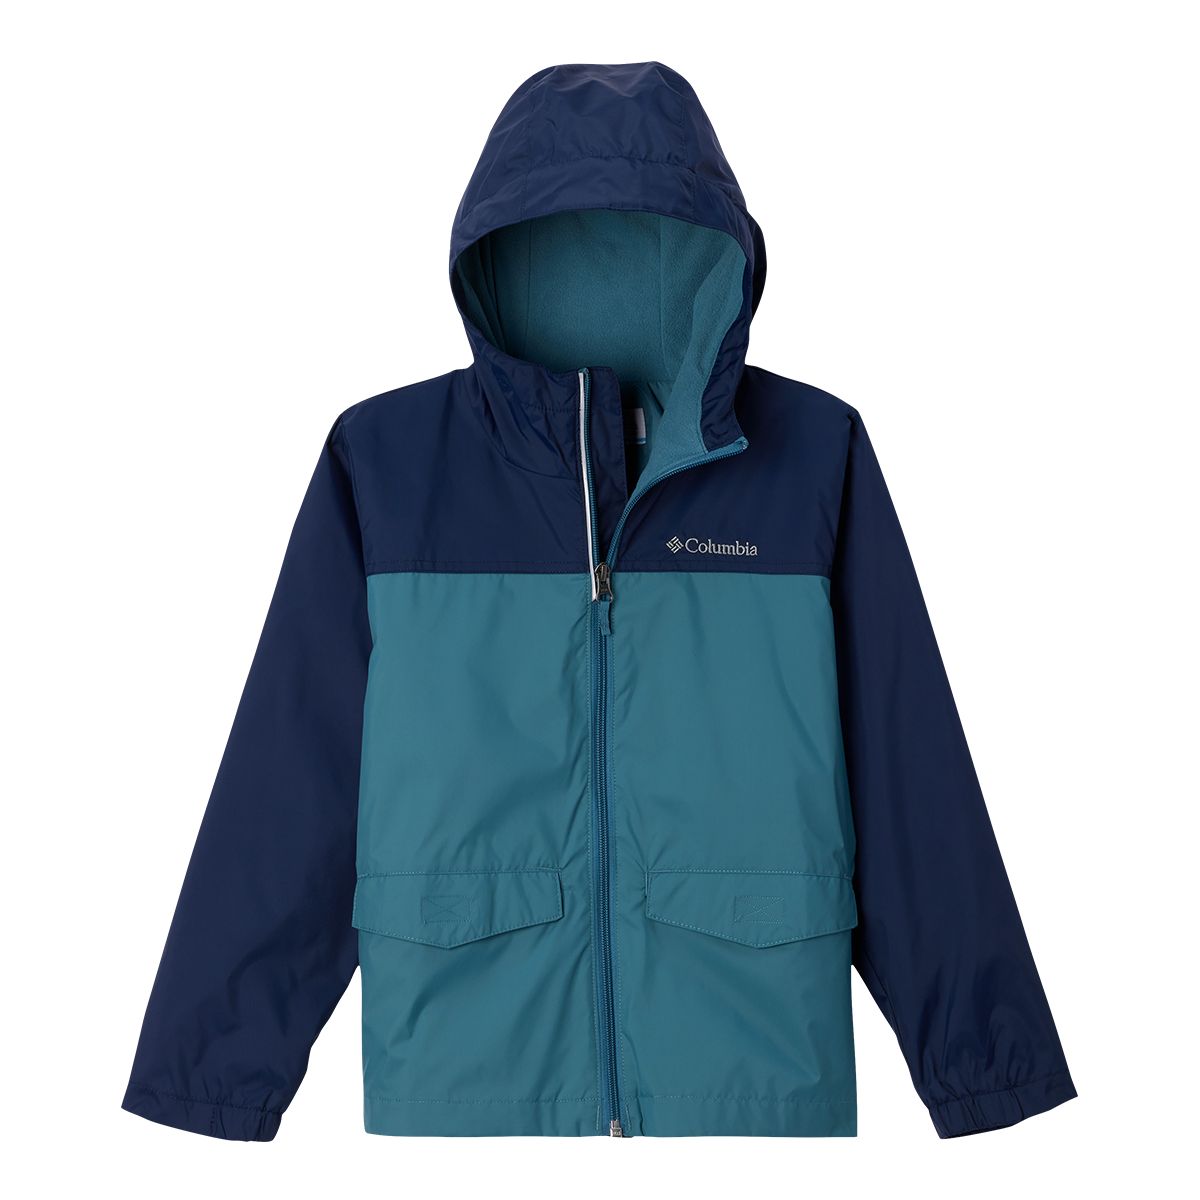 Image of Columbia Youth Unisex Rain-Zilla Jacket